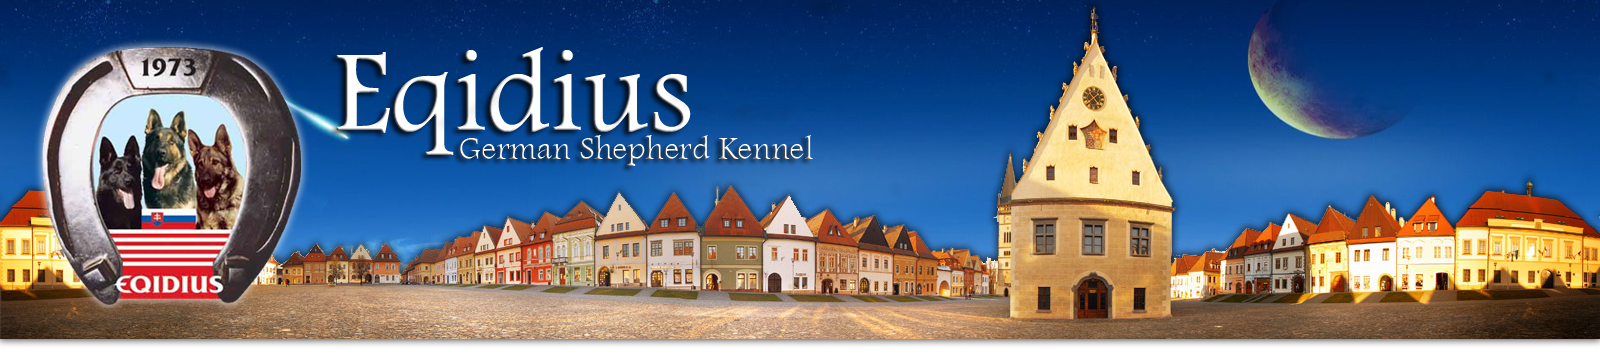 Eqidius - Kennel of German Shepherds